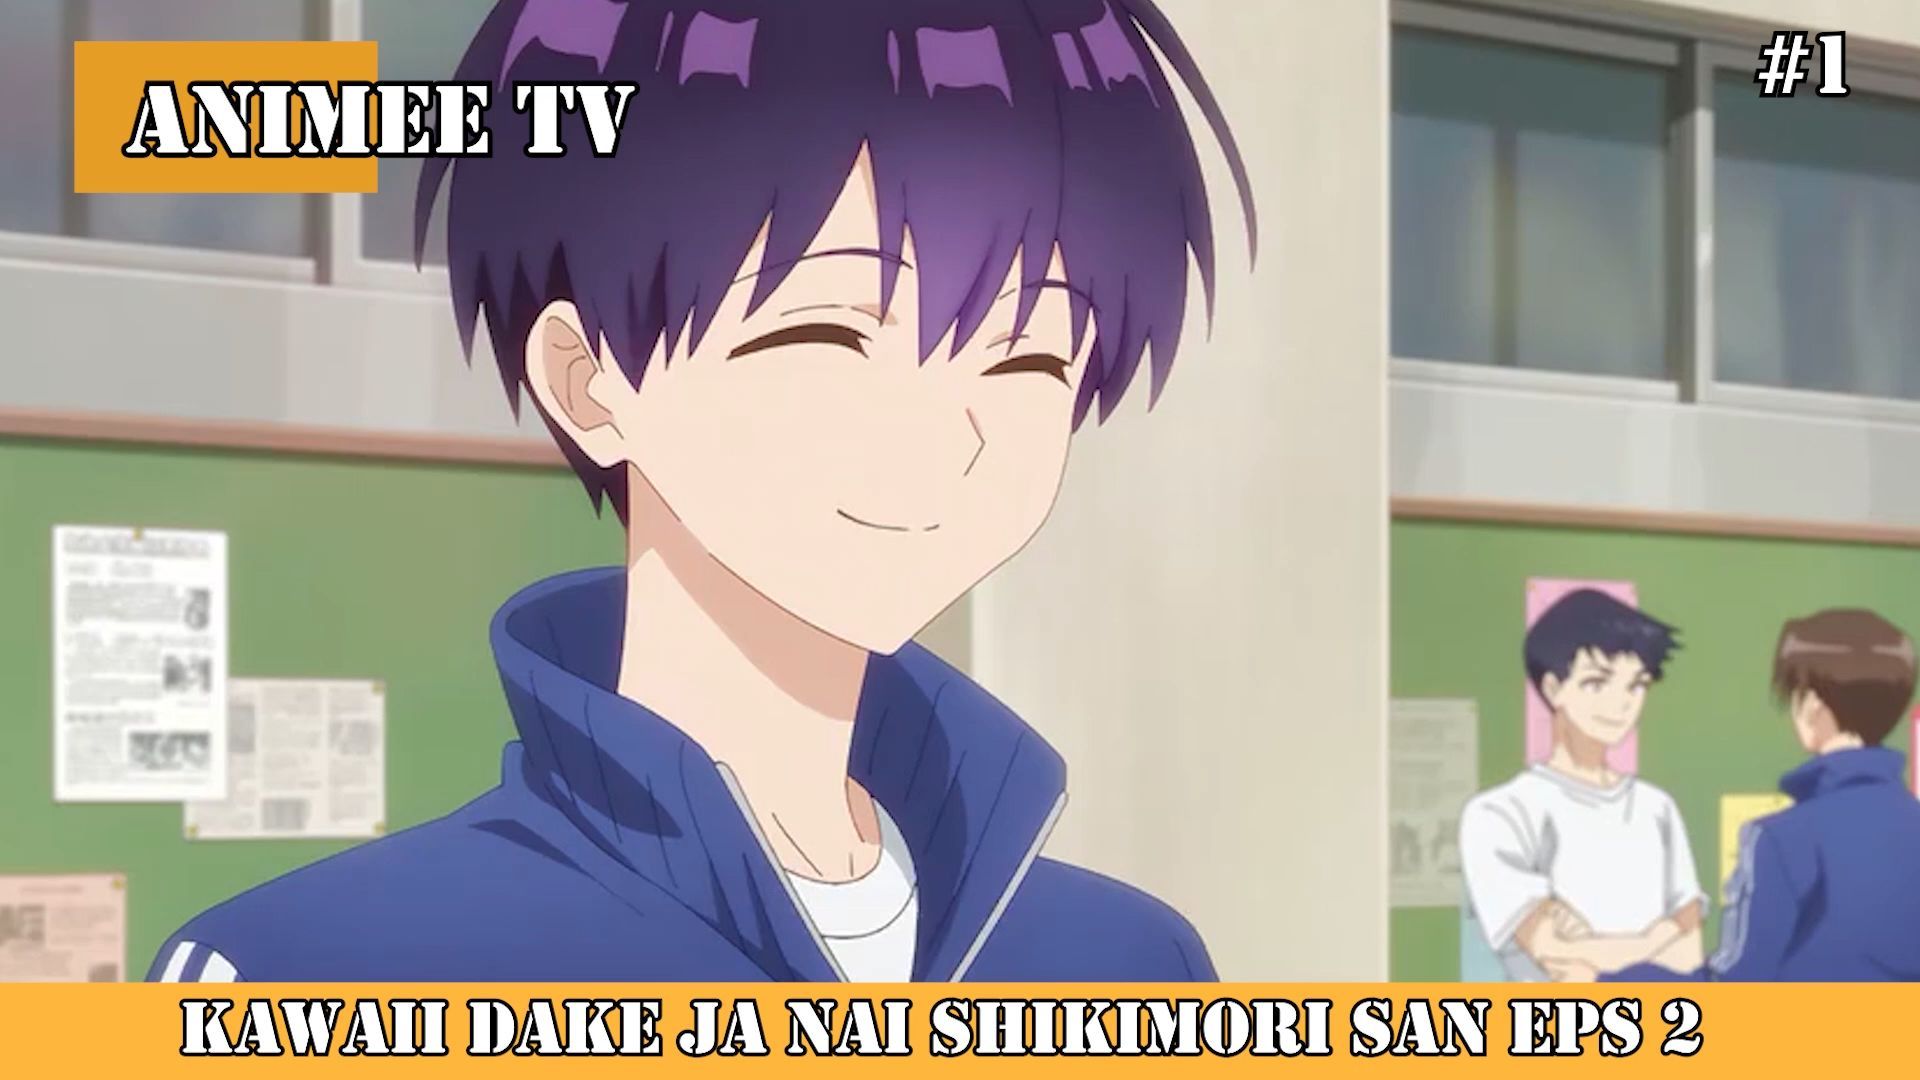 Shikimori brother - Shikimori's Not Just a Cutie - BiliBili